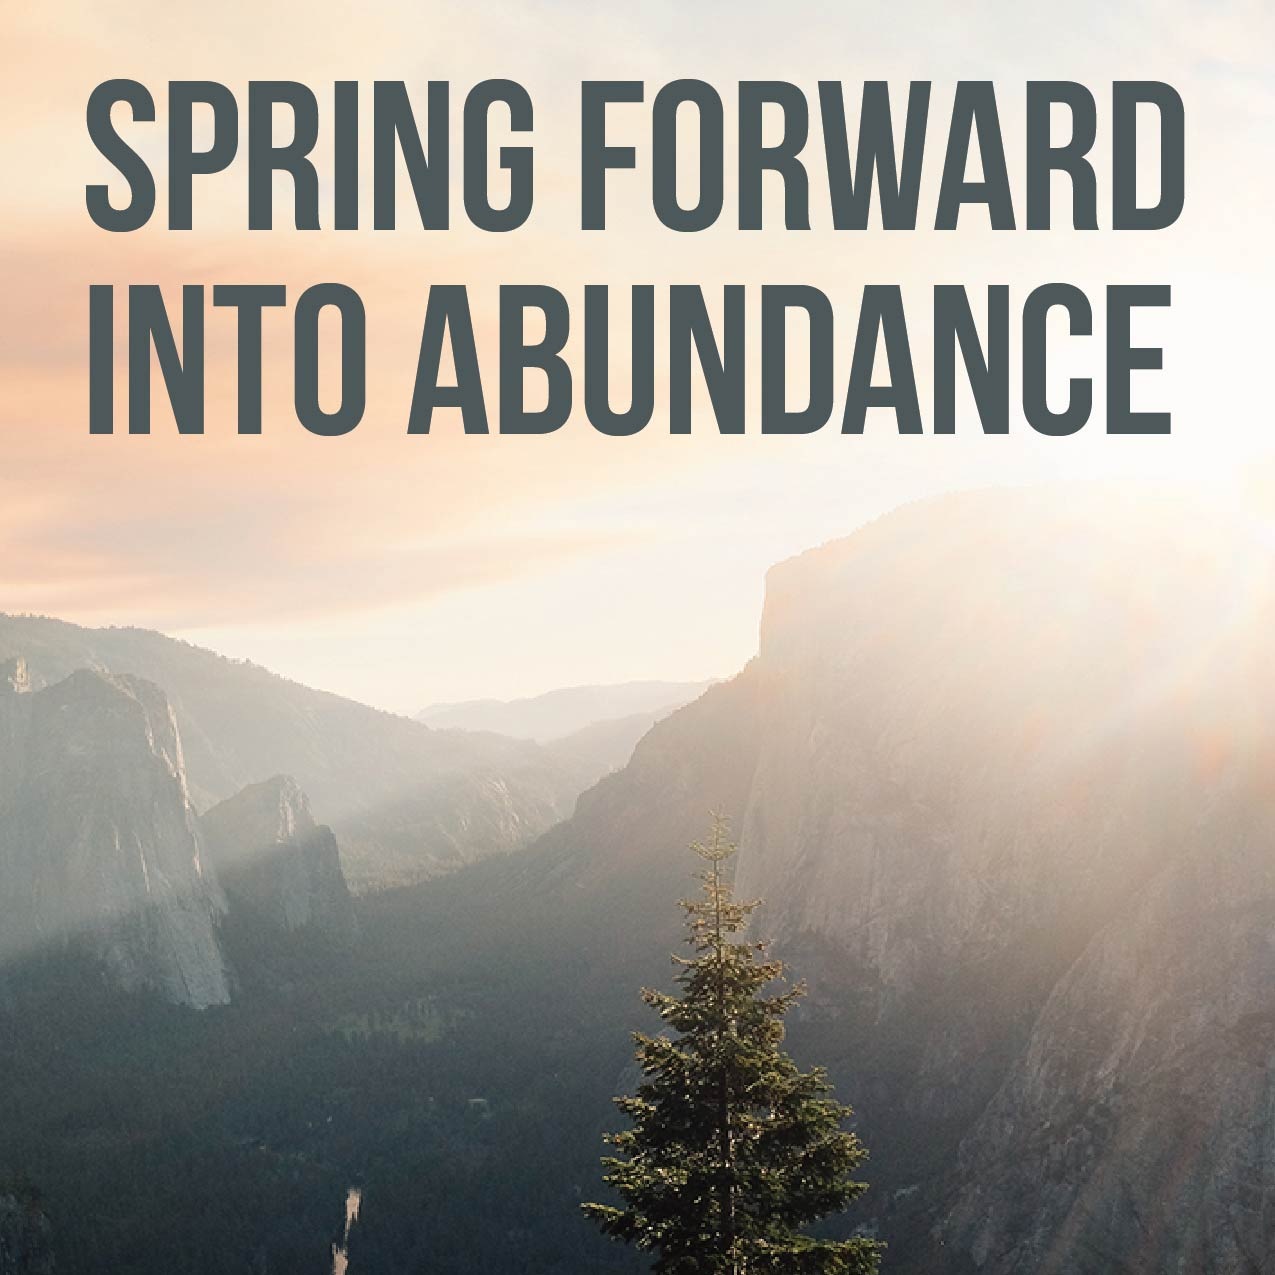 “Spring” Forward to Abundance